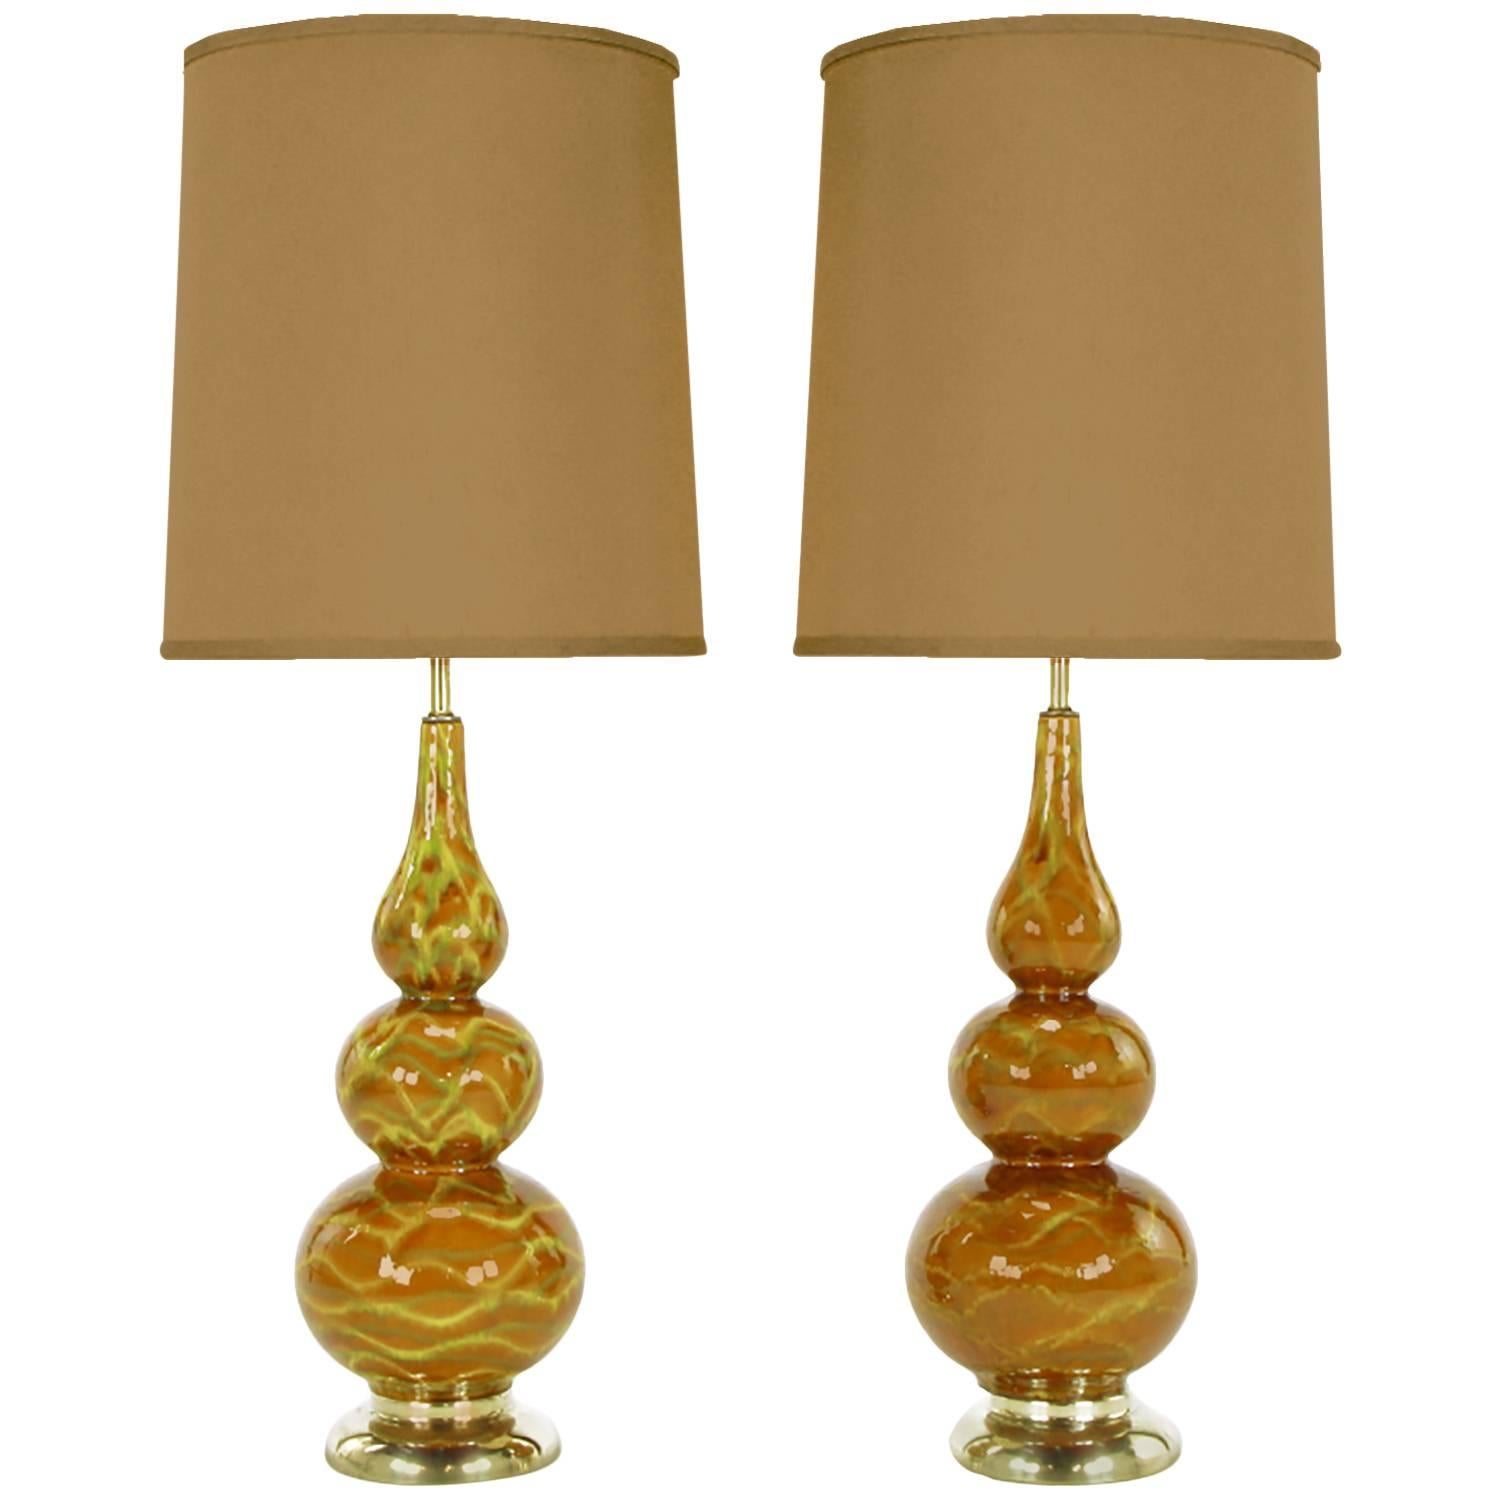 Pair of Caramel Glazed Ceramic Triple Gourd Form Table Lamps